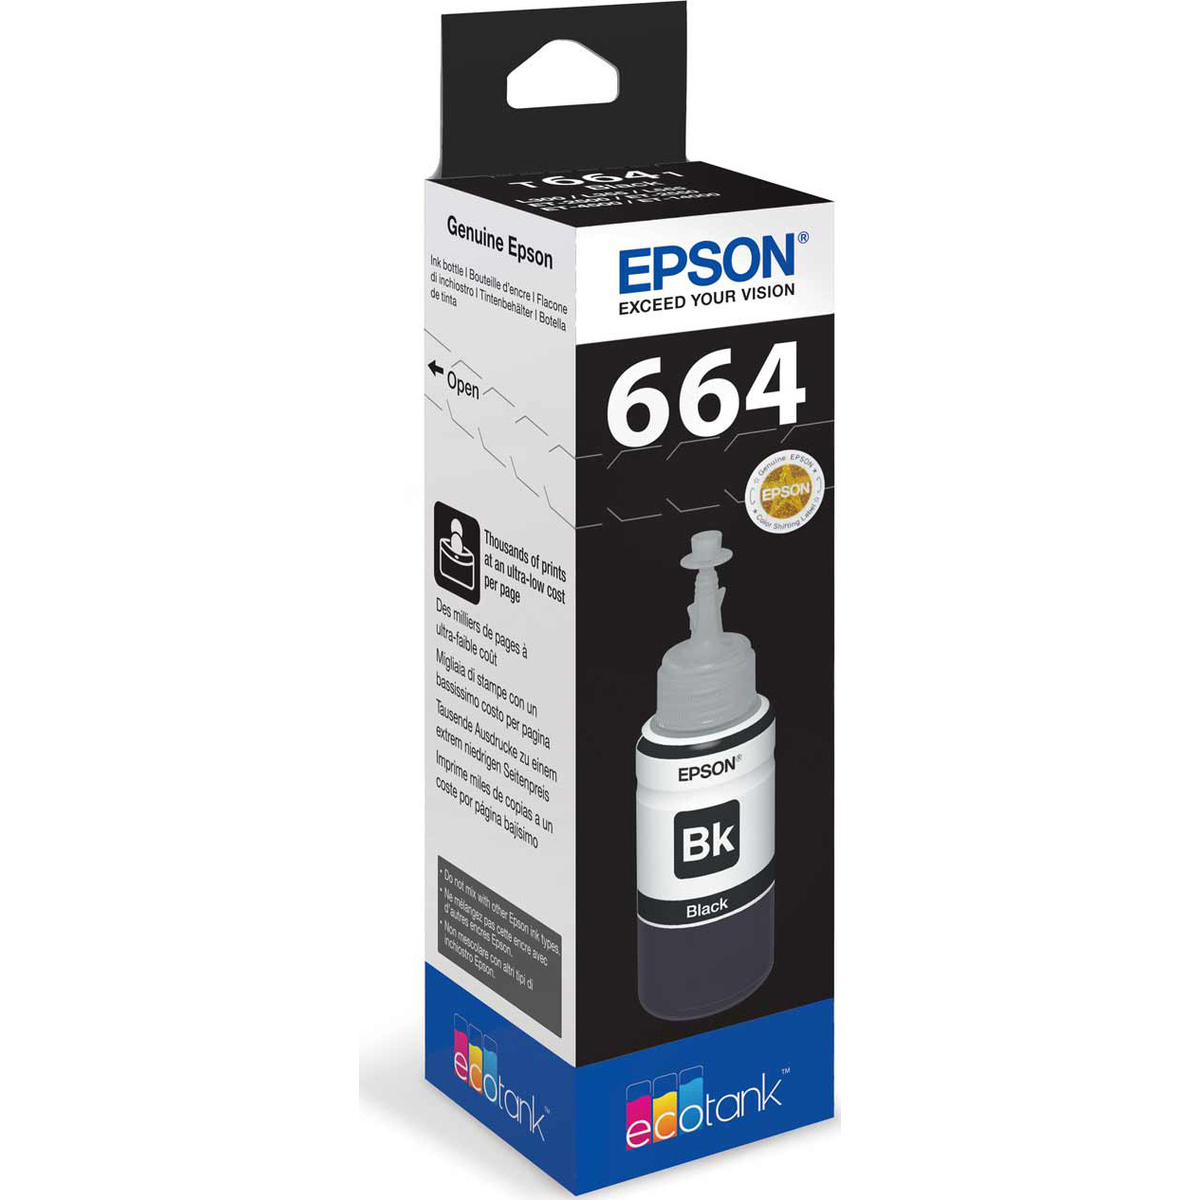 Buy Epson 664 Ecotank Ink Bottle 70ml Black Online Aed36 From Bayzon 1127